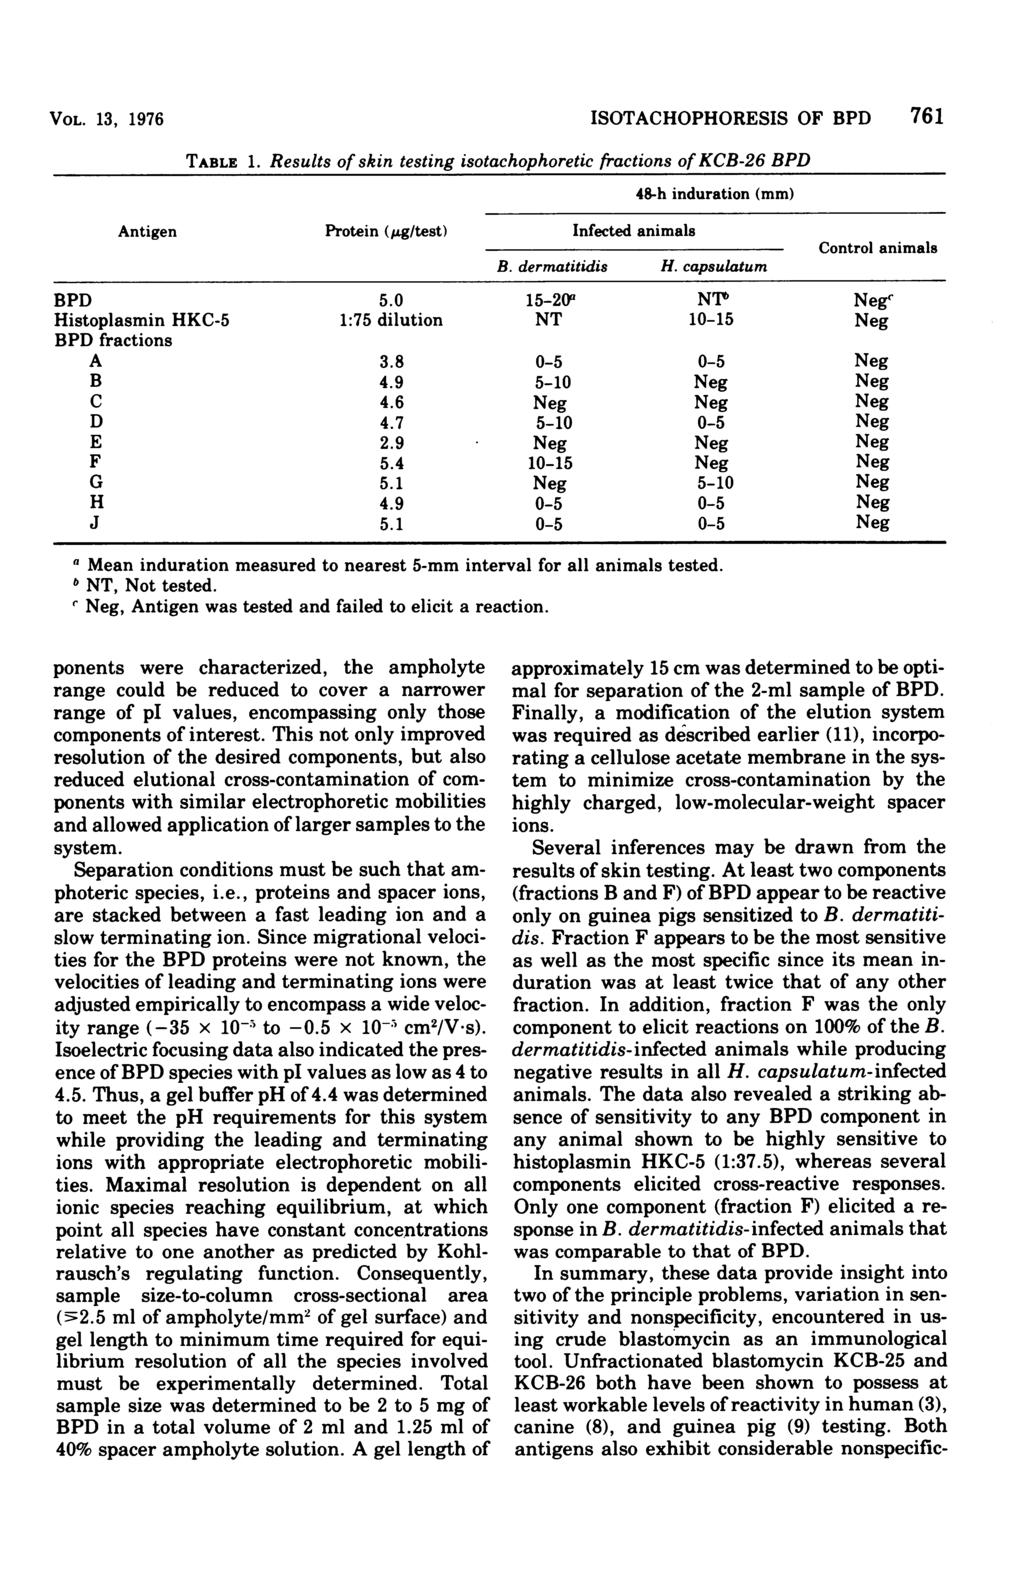 VOL. 13, 1976 TABLE 1. ISOTACHOPHORESIS OF BPD 761 Results of skin testing isotachophoretic fractions of KCB-26 BPD 48-h induration (mm) Antigen Protein (pg/test) Infected animals B. dermatitidis H.